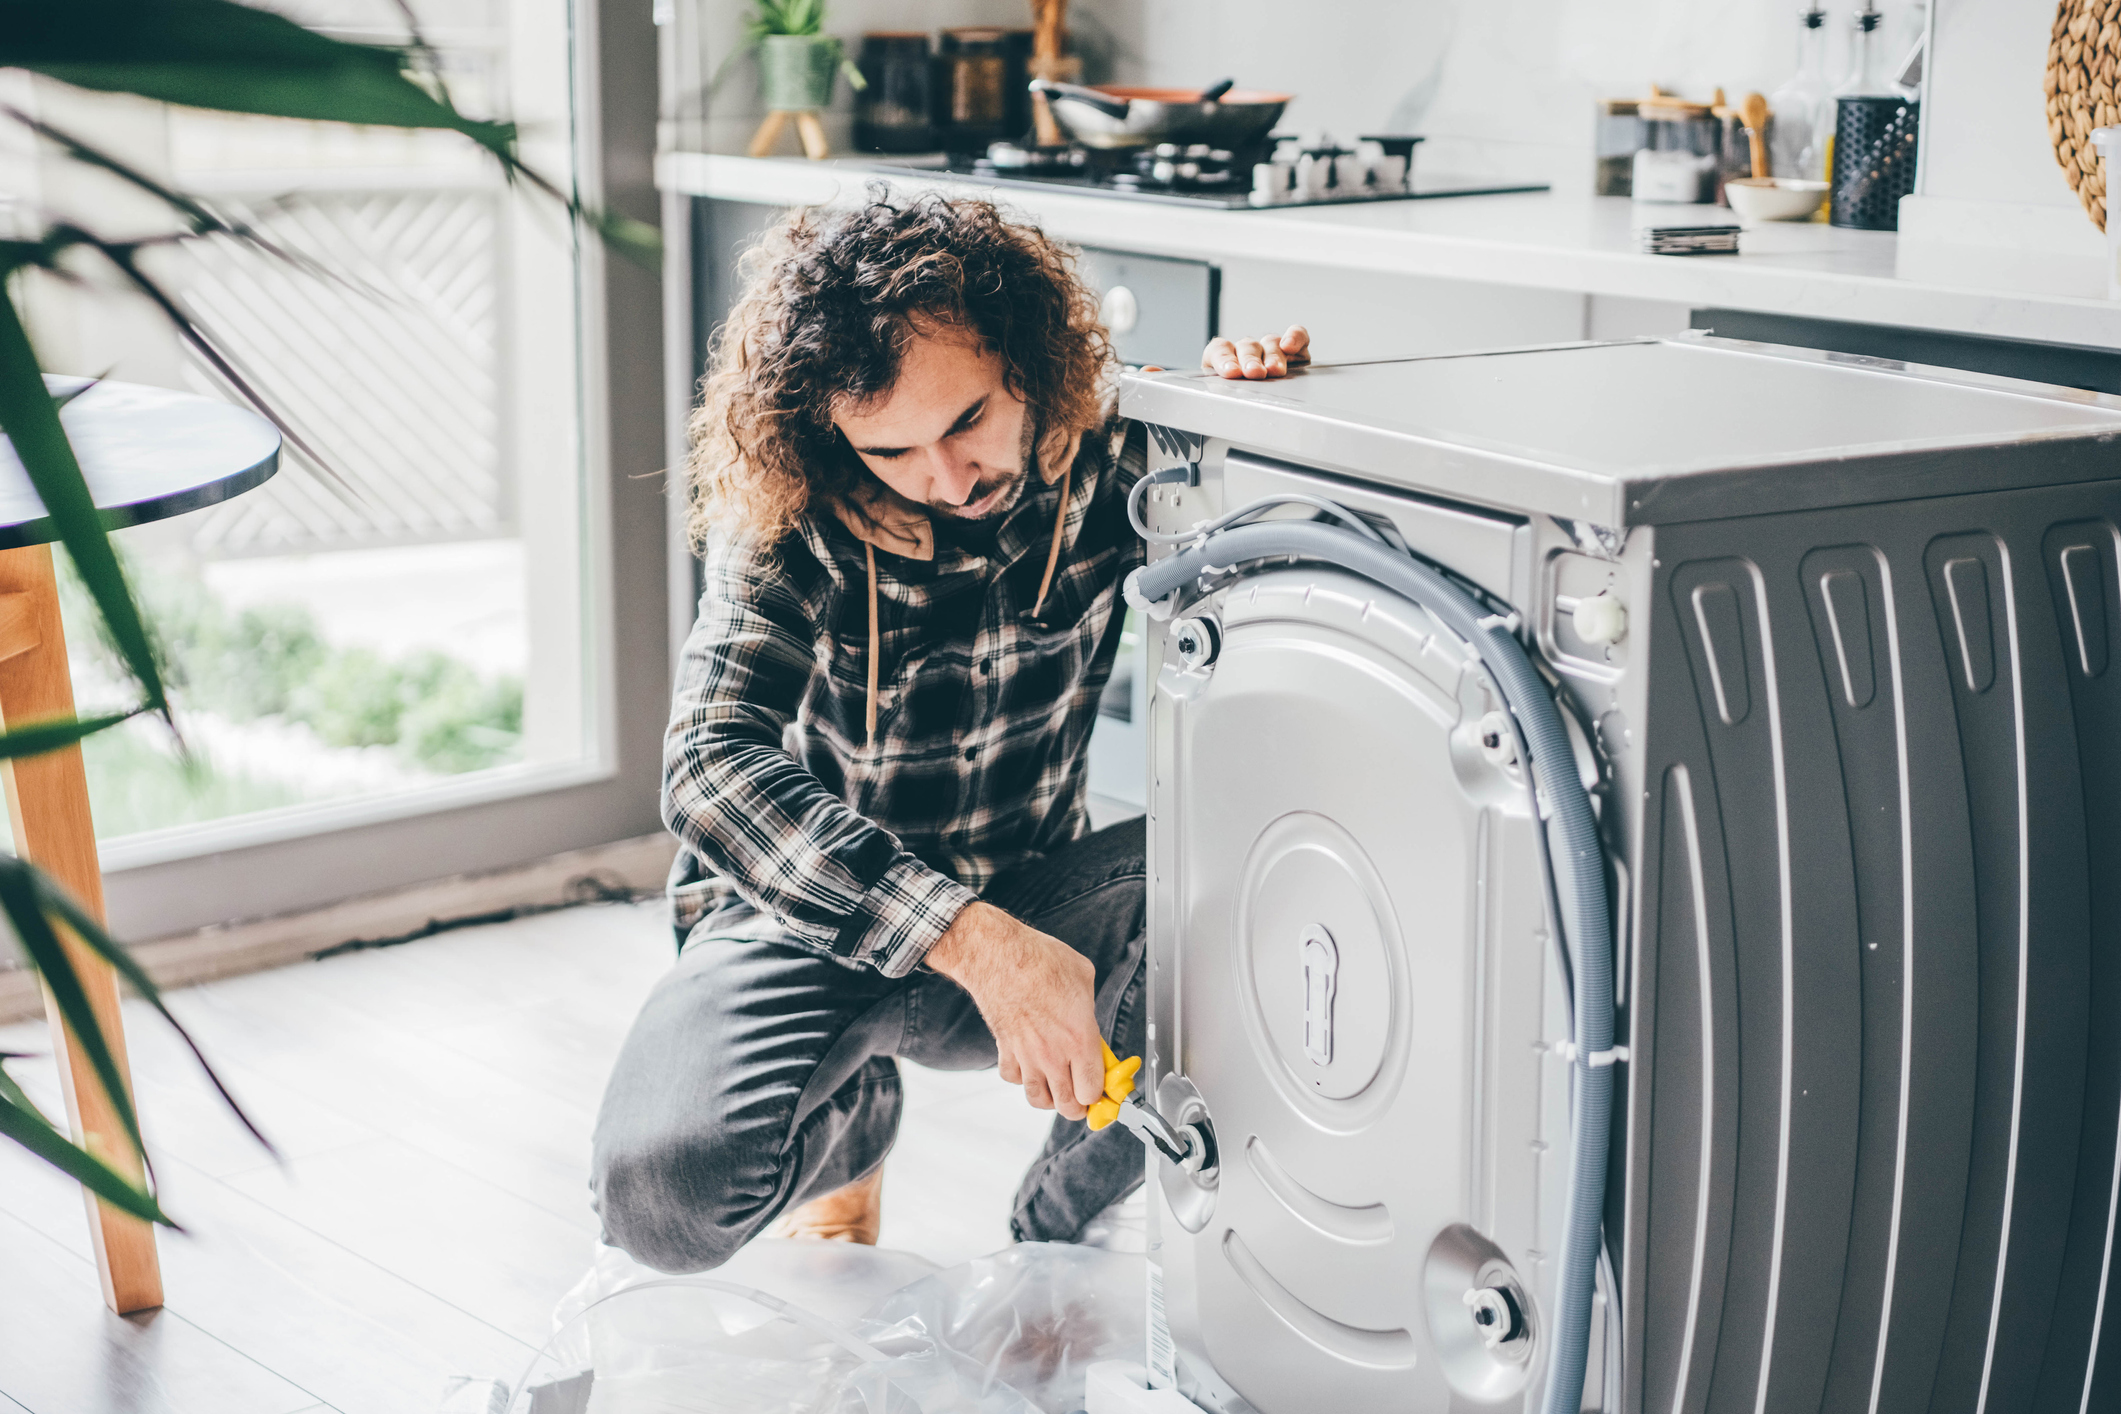 Man fixing washing machine, use Domestic & General